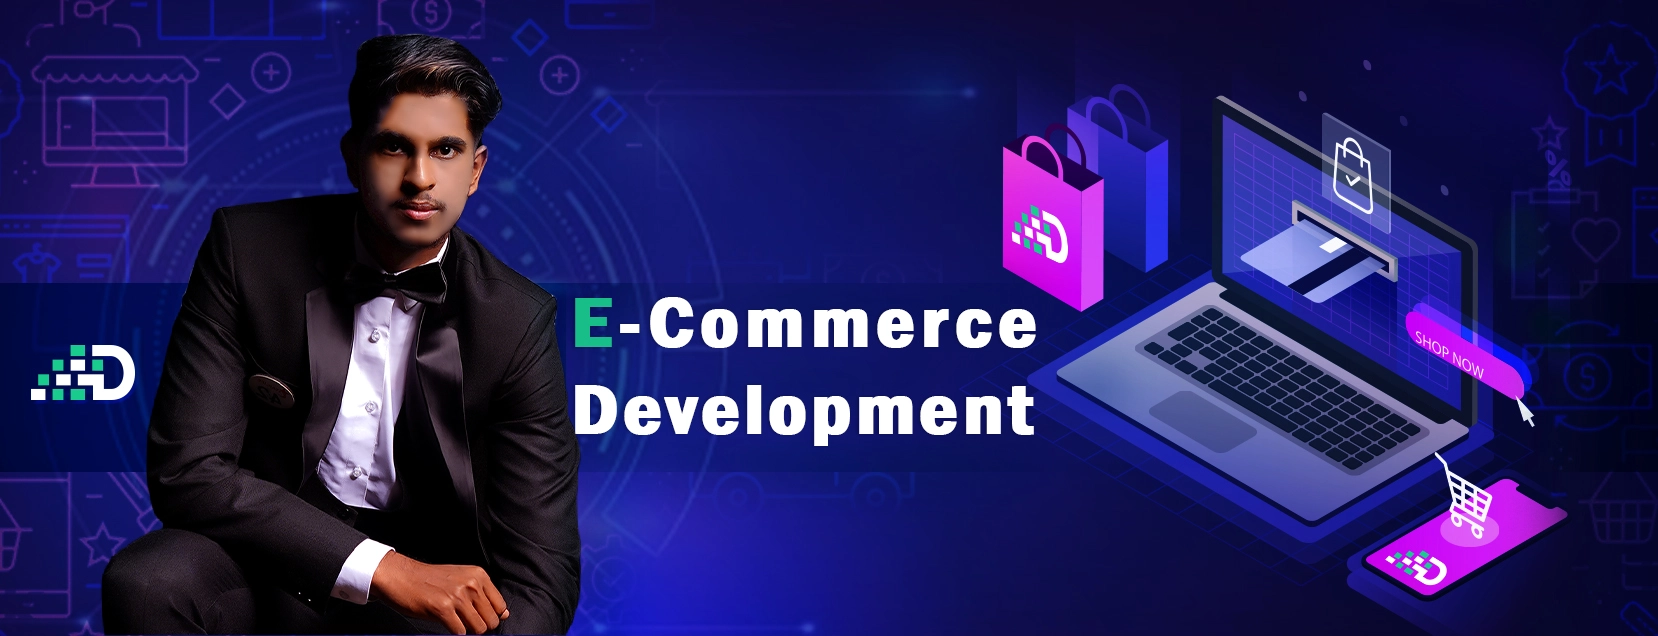 ecommerce-banner-image